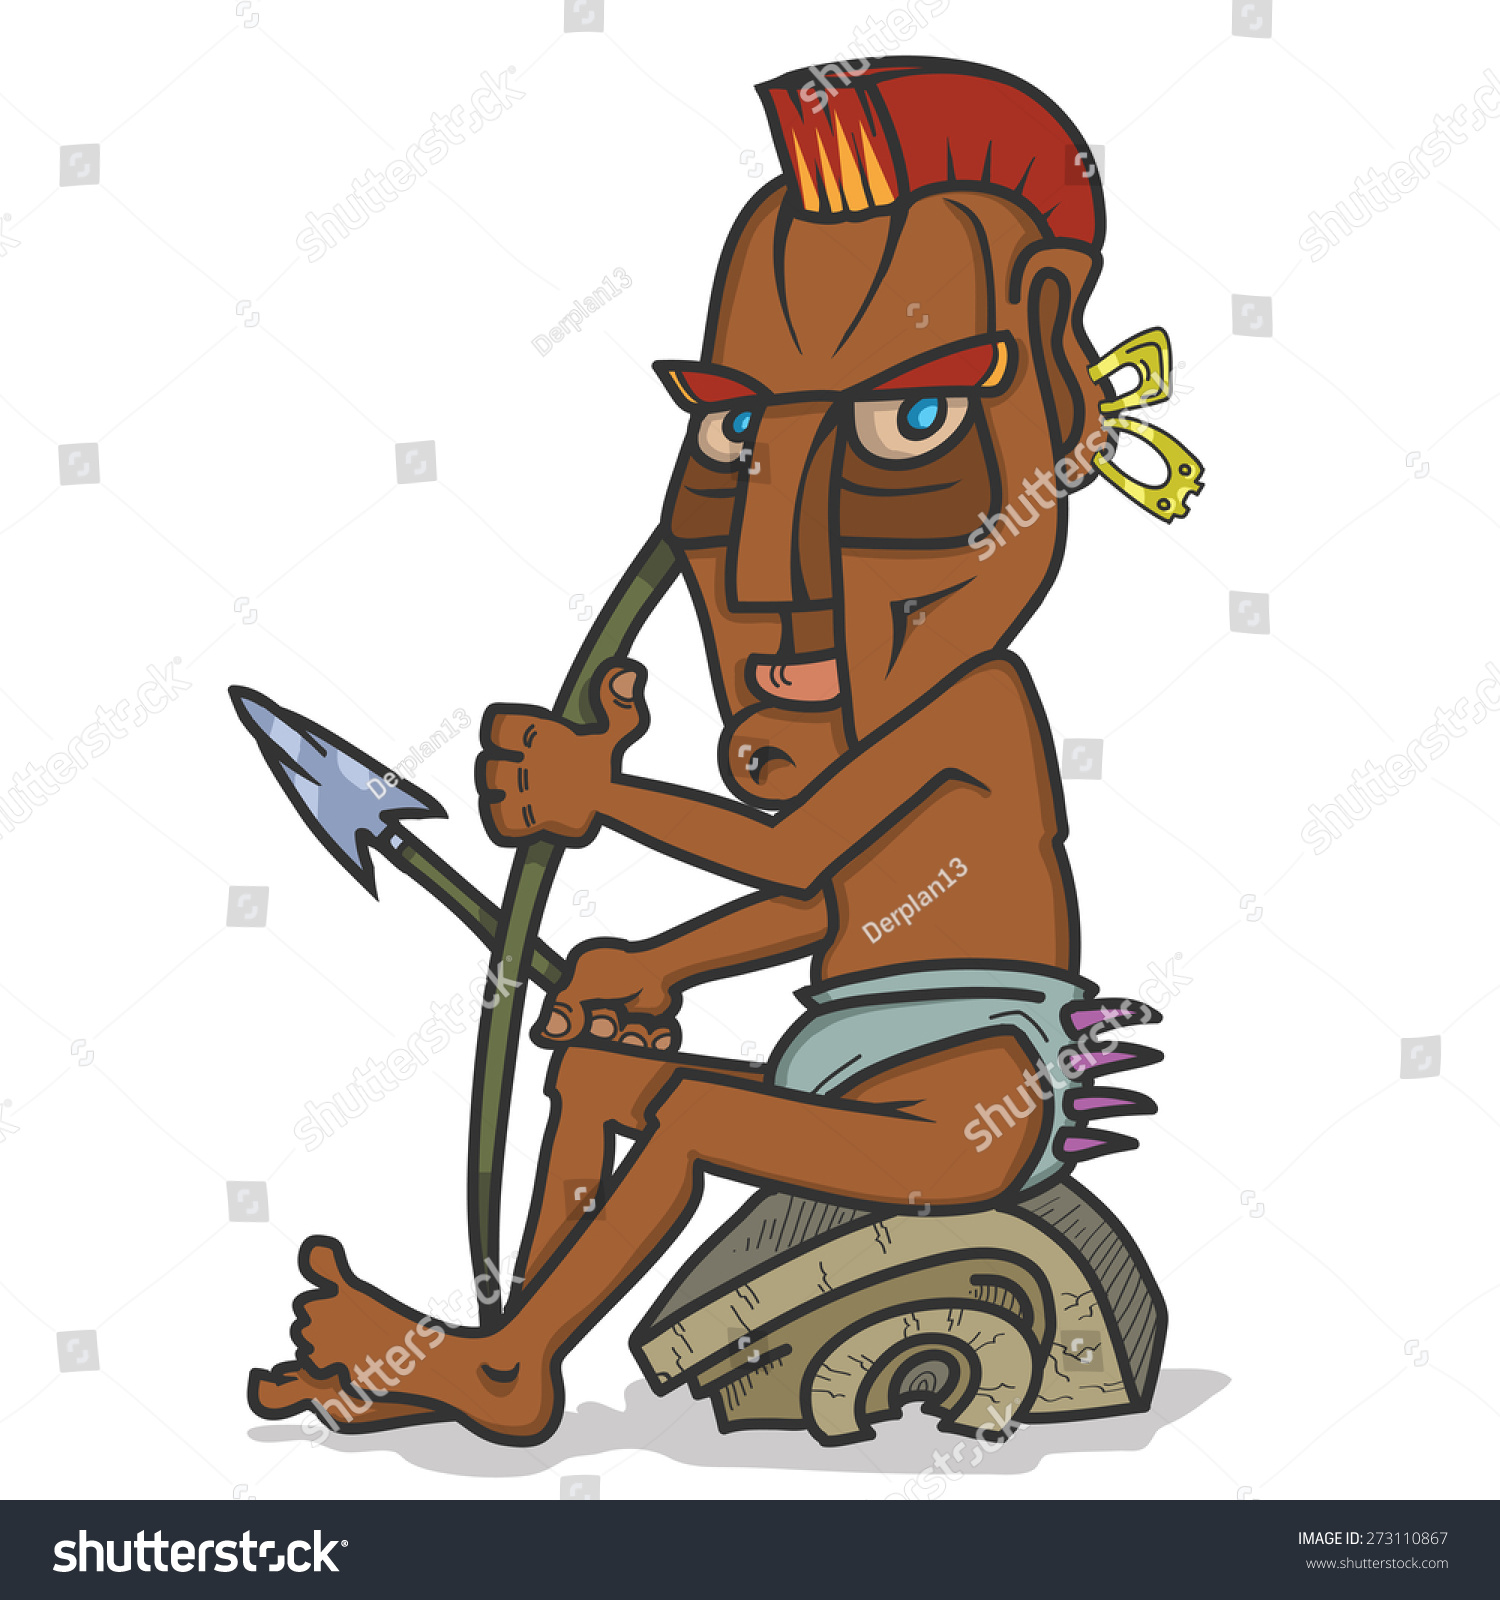 American Indian Cartoon Character: เวกเตอร์สต็อก (ปลอดค่าลิขสิทธิ์